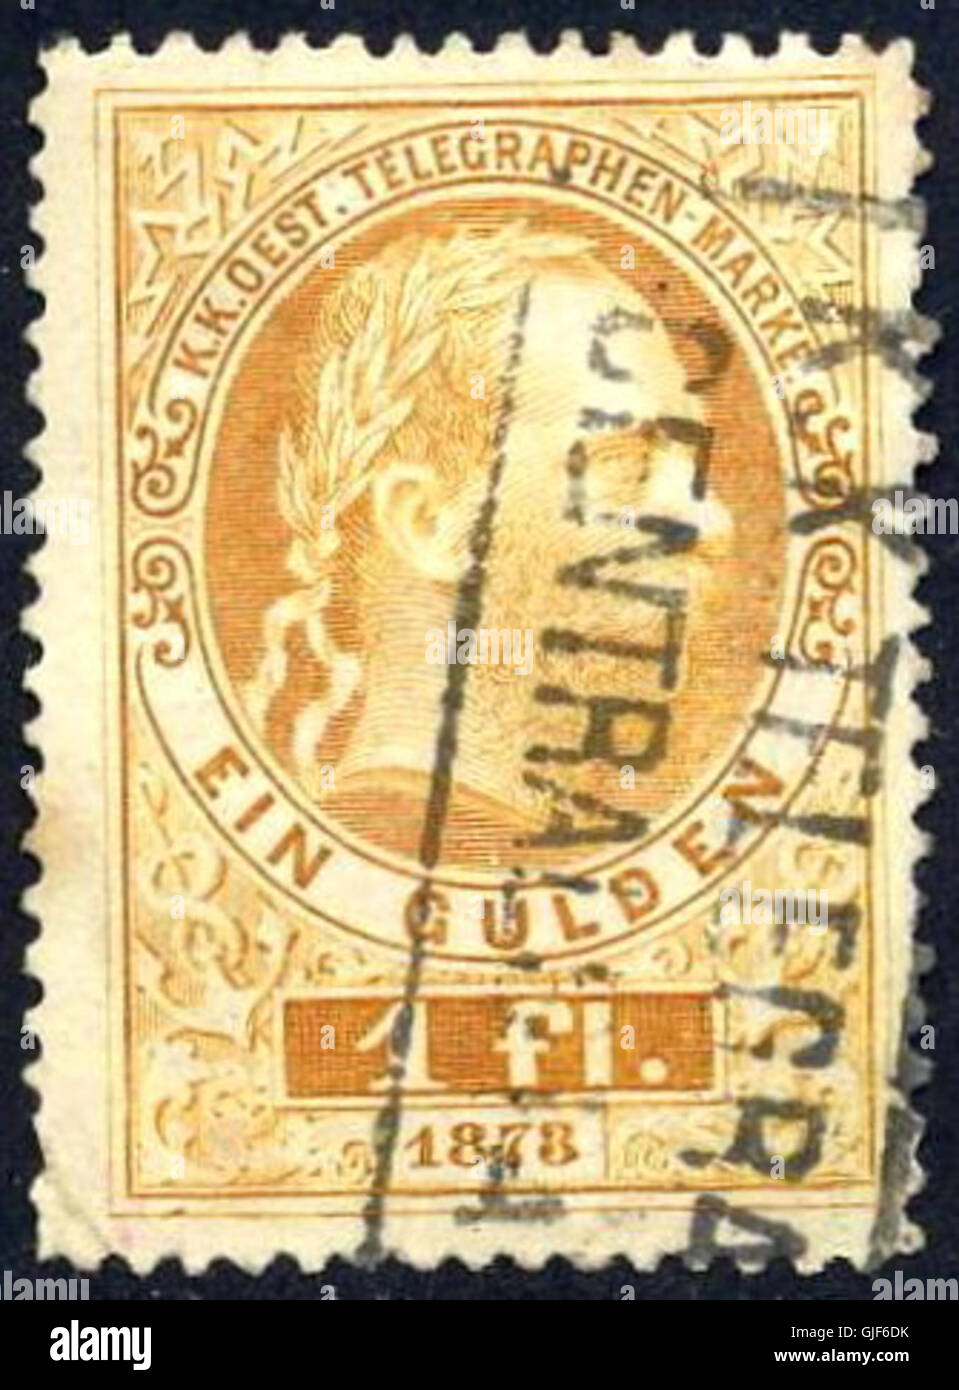 1fl Austria telegraph stamp 1874 KK cancel Stock Photo